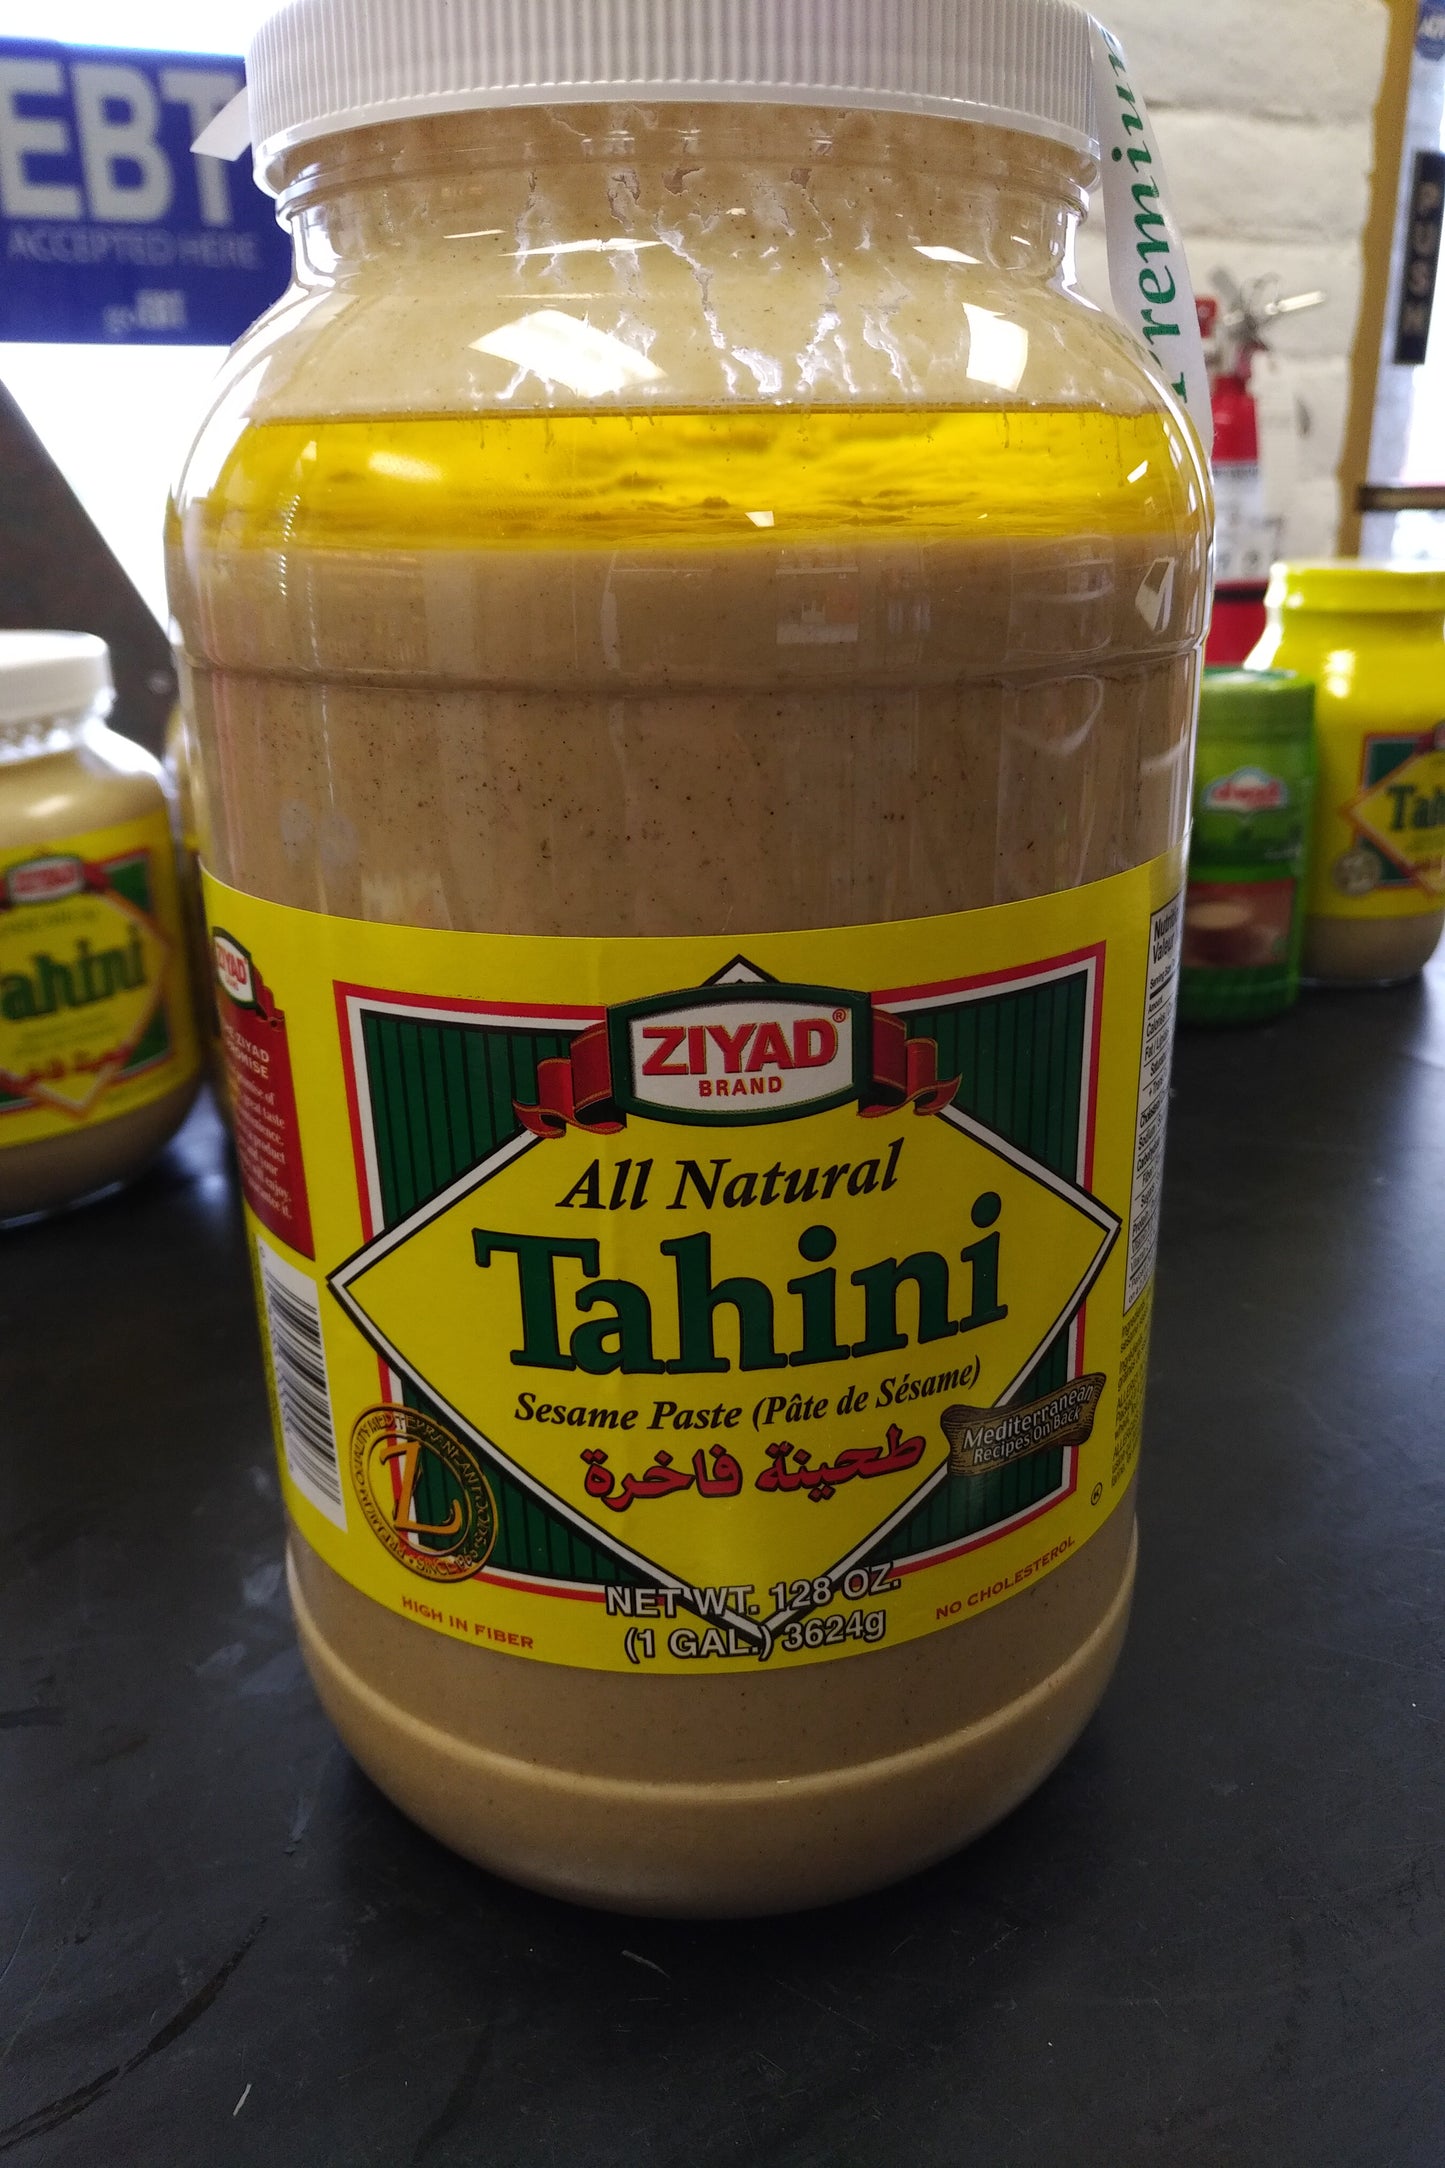 Ziyad Tahini Sesame Paste 1Gal (128oz)